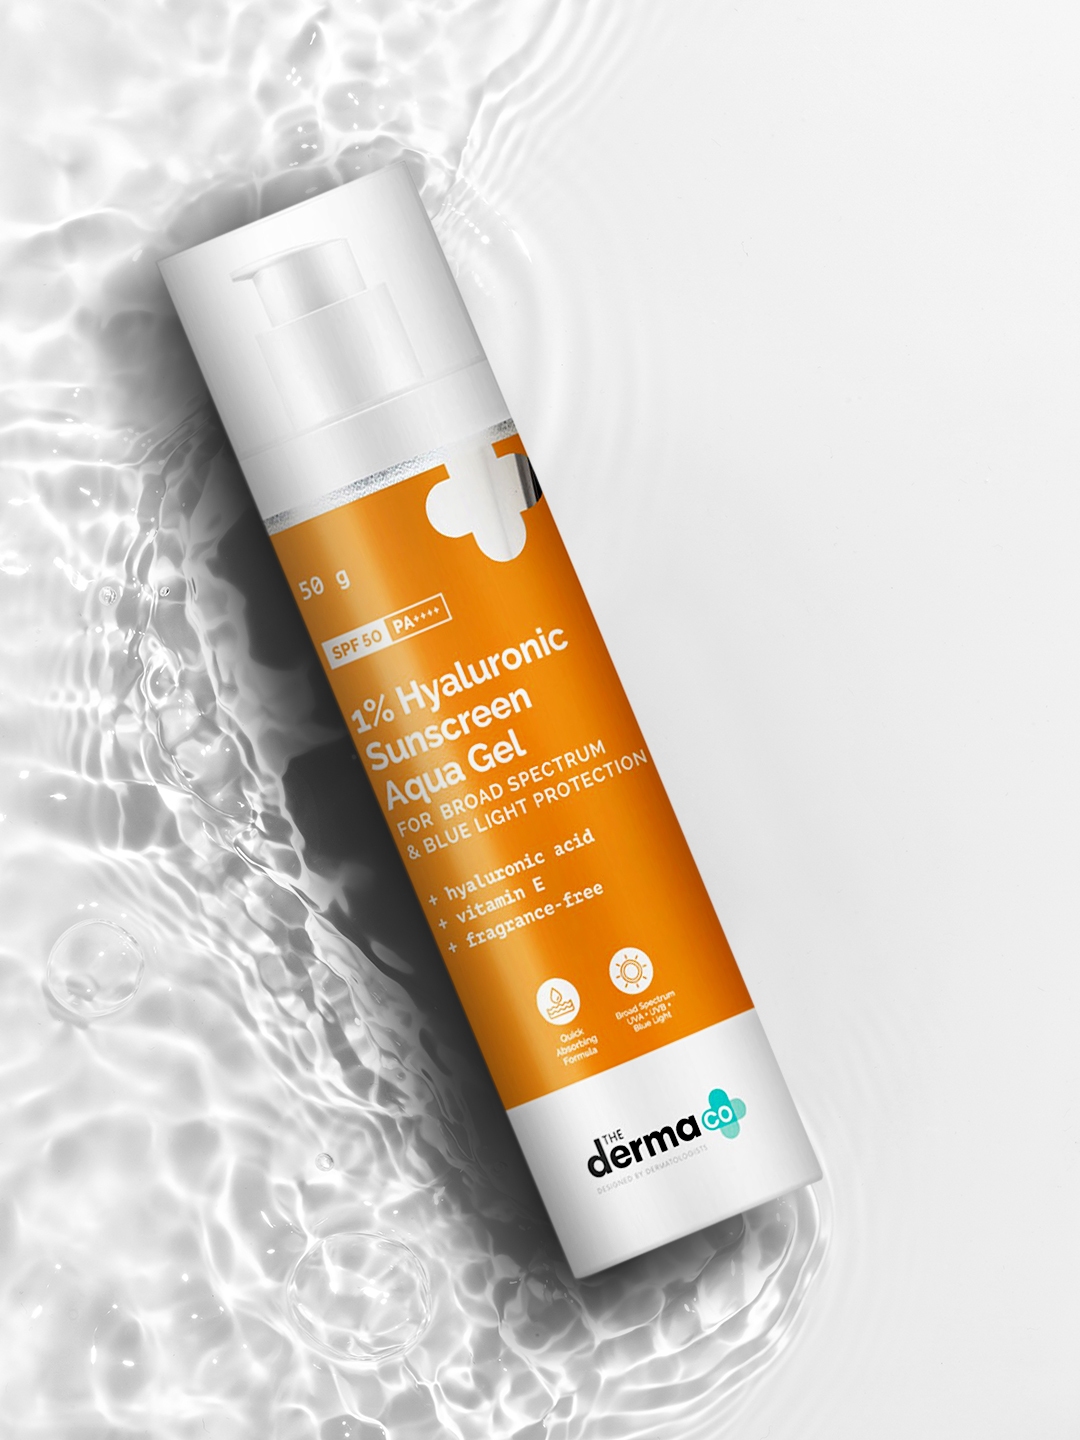 Buy The Derma Co. 1 Hyaluronic Sunscreen Aqua Gel With Titanium Oxide